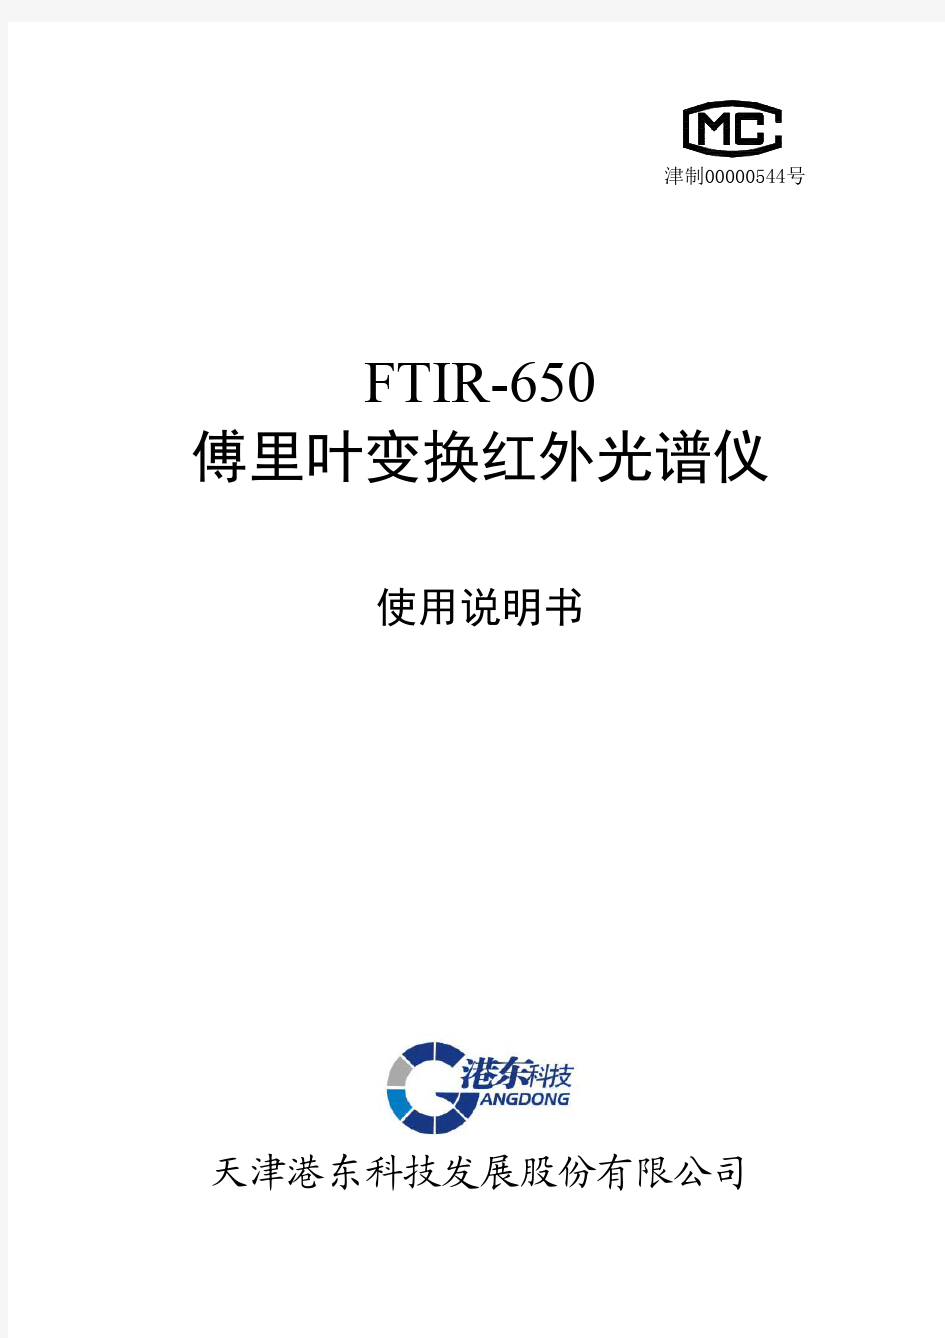 FTIR-650使用说明书